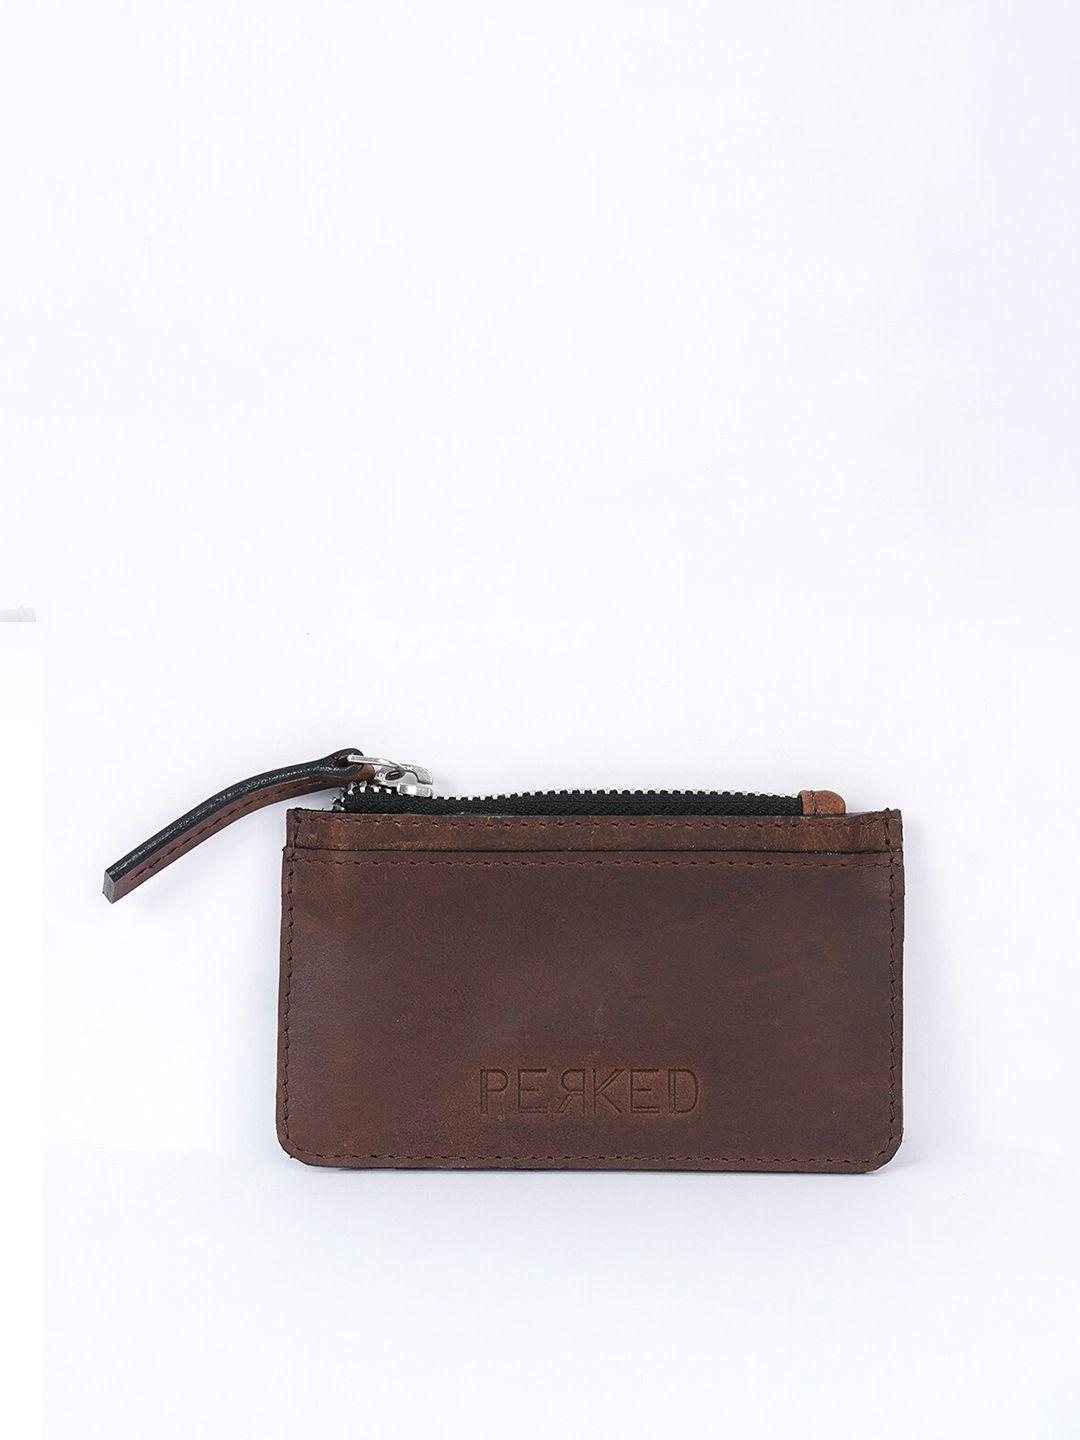 perked textured leather zip around wallet